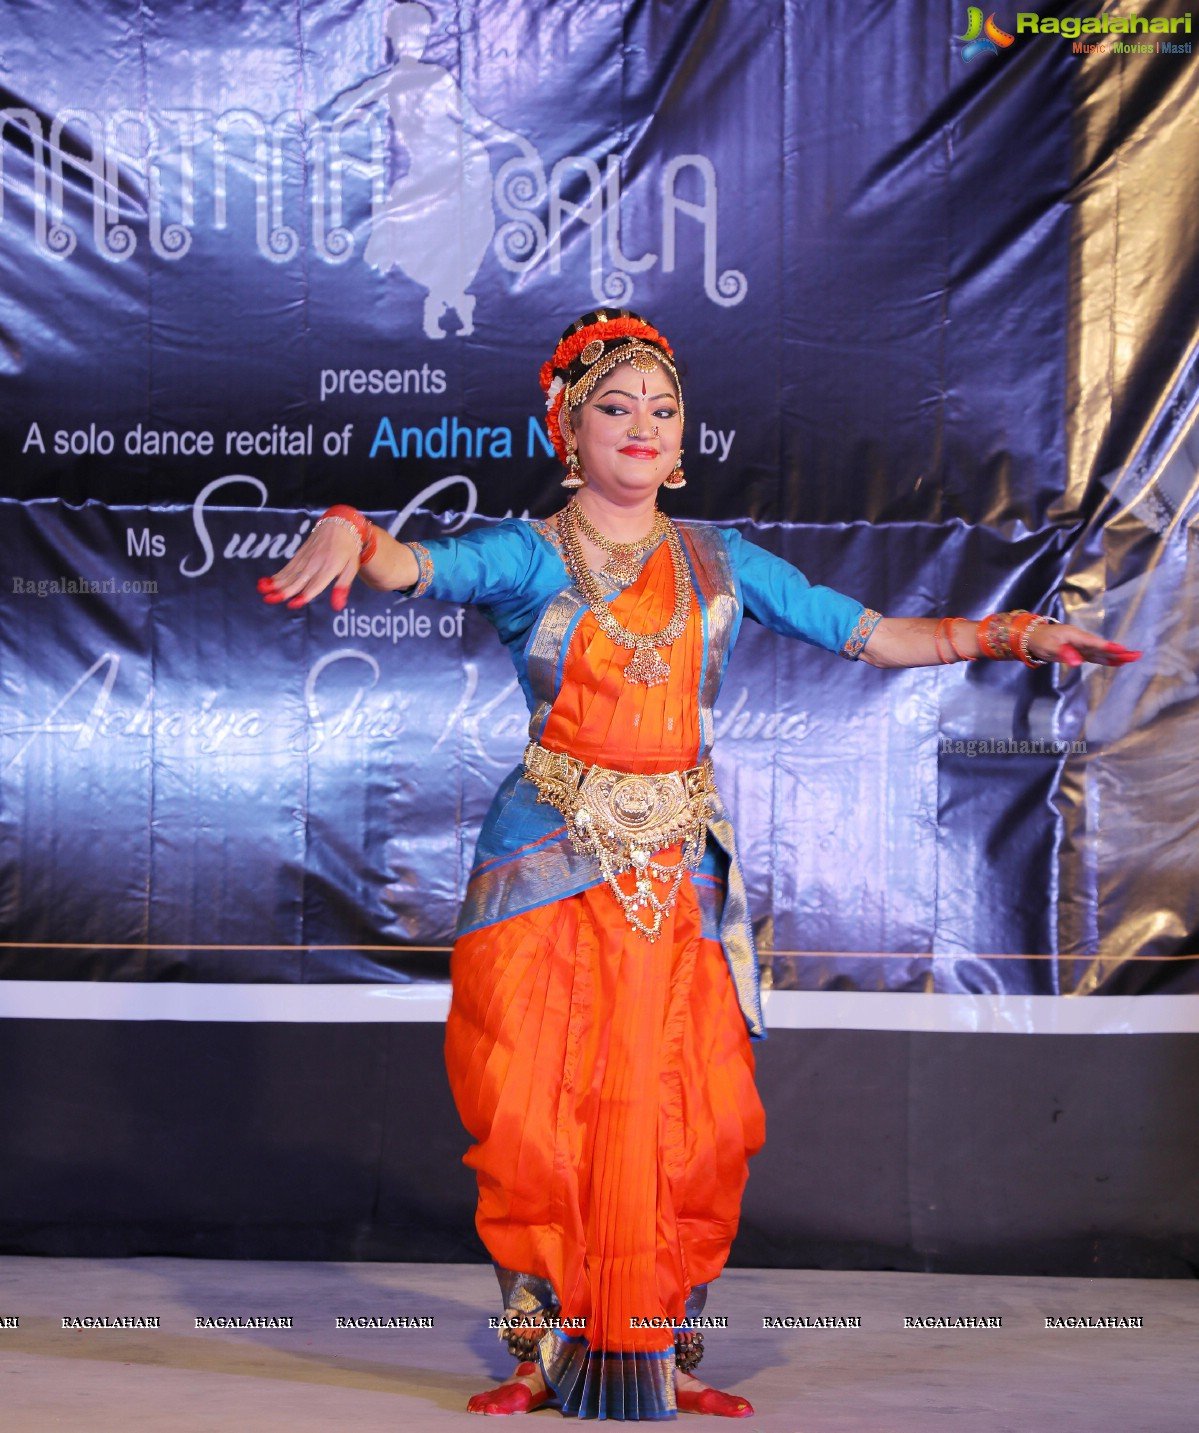 Ms Sunila Gollapudi Presents Andhra Natyam & Golla Kalapam Dance Recital